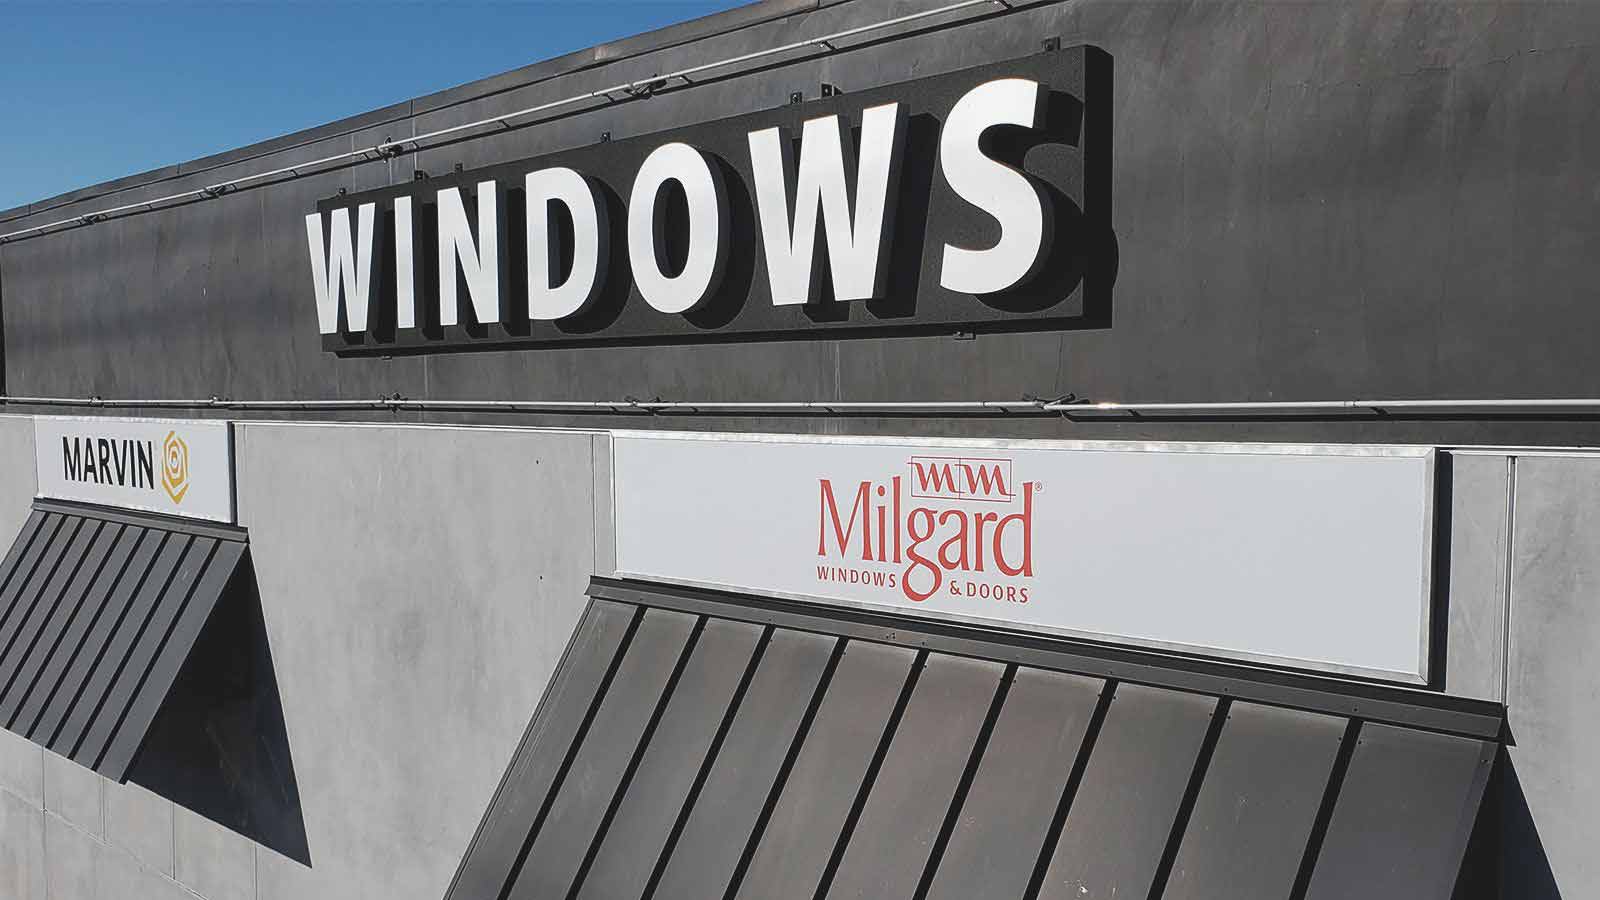 milgard windows and doors building sign